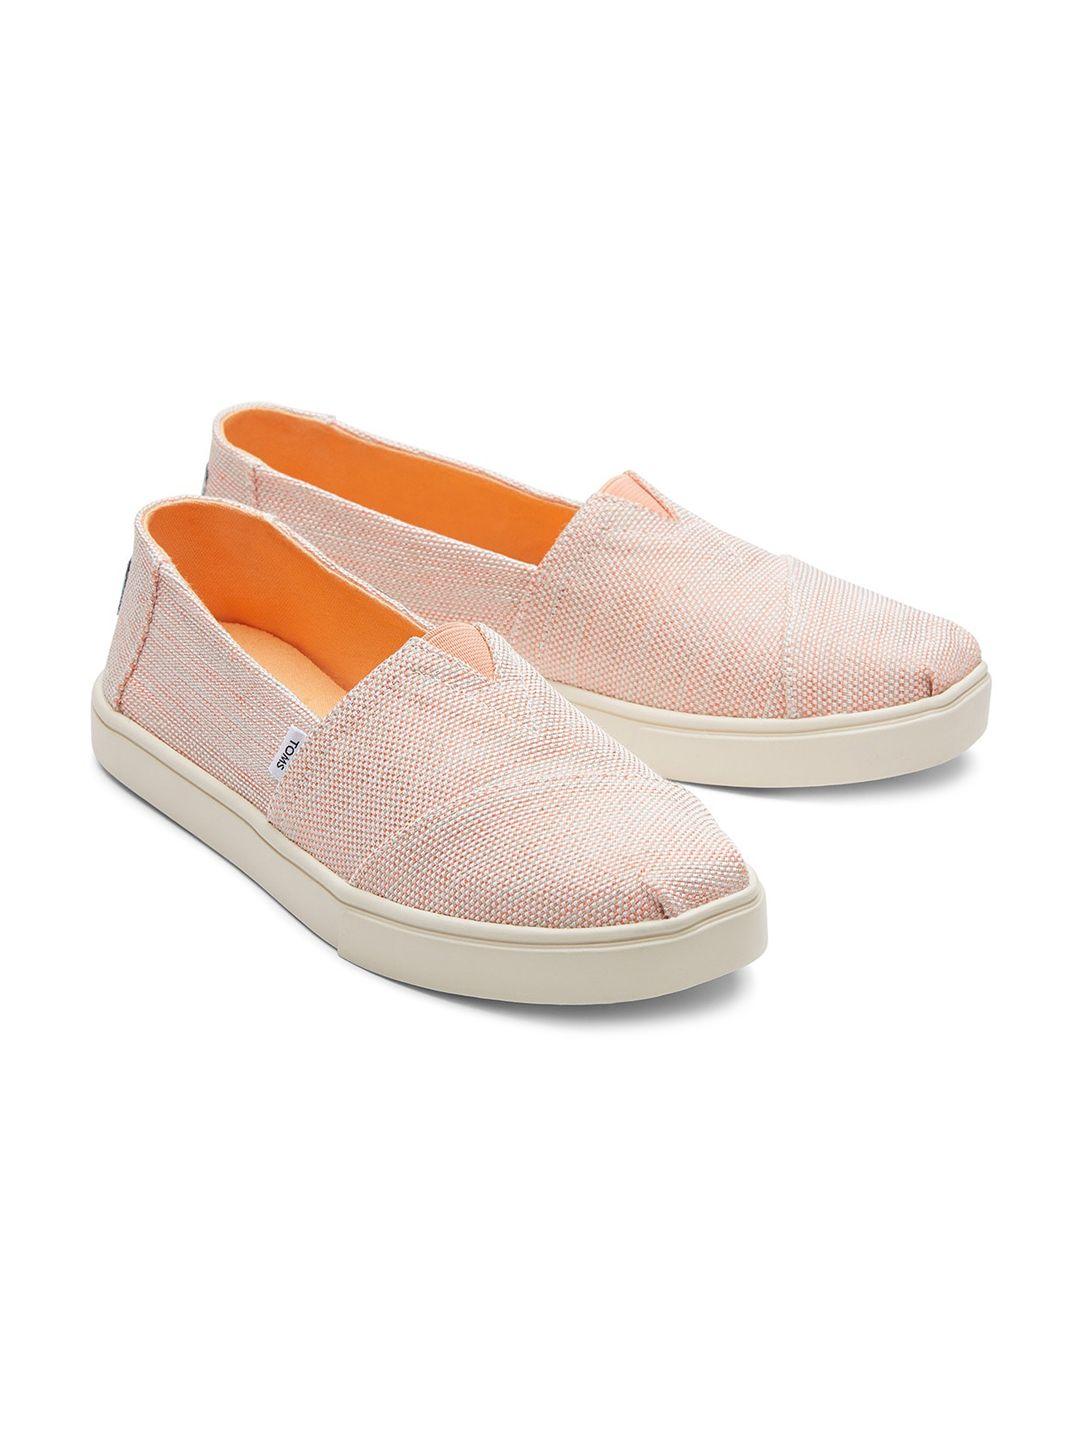 toms women orange textured alpargata slip-on sneakers